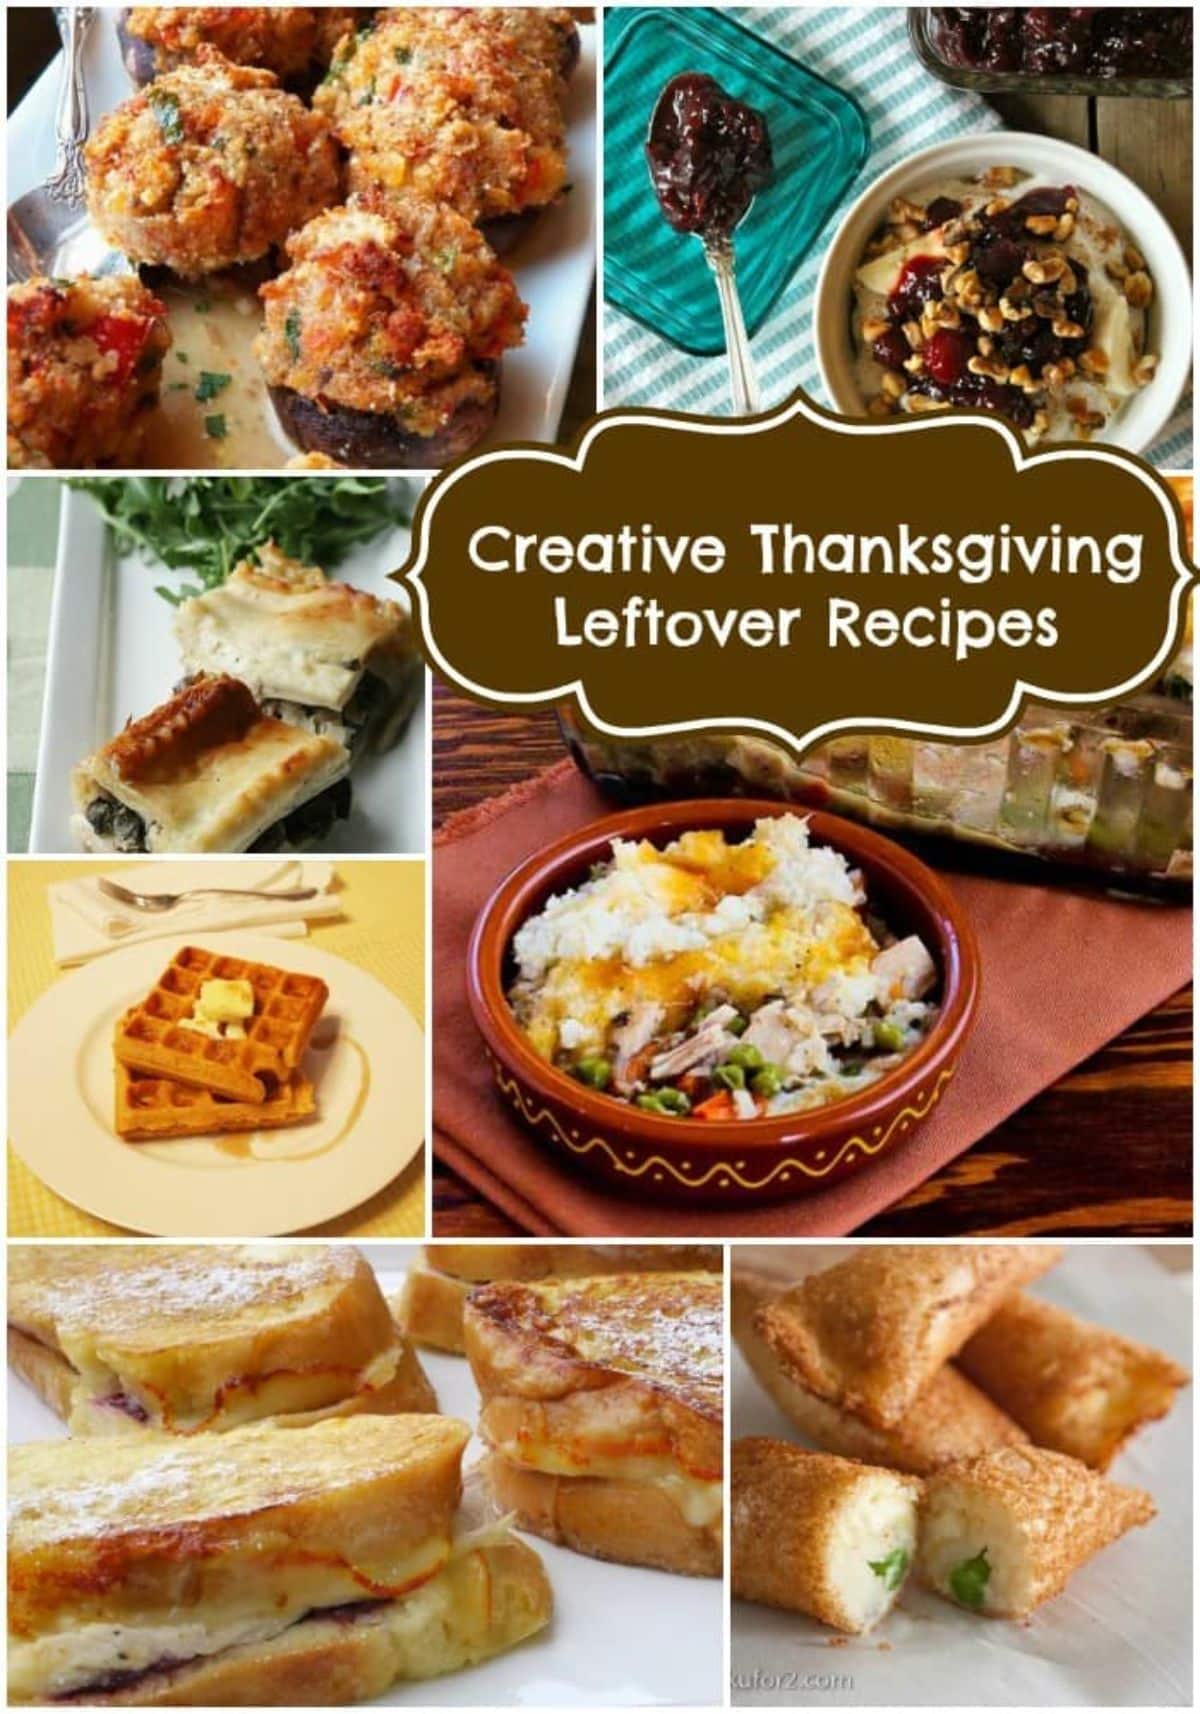 Creative thanksgiving leftover recipes.